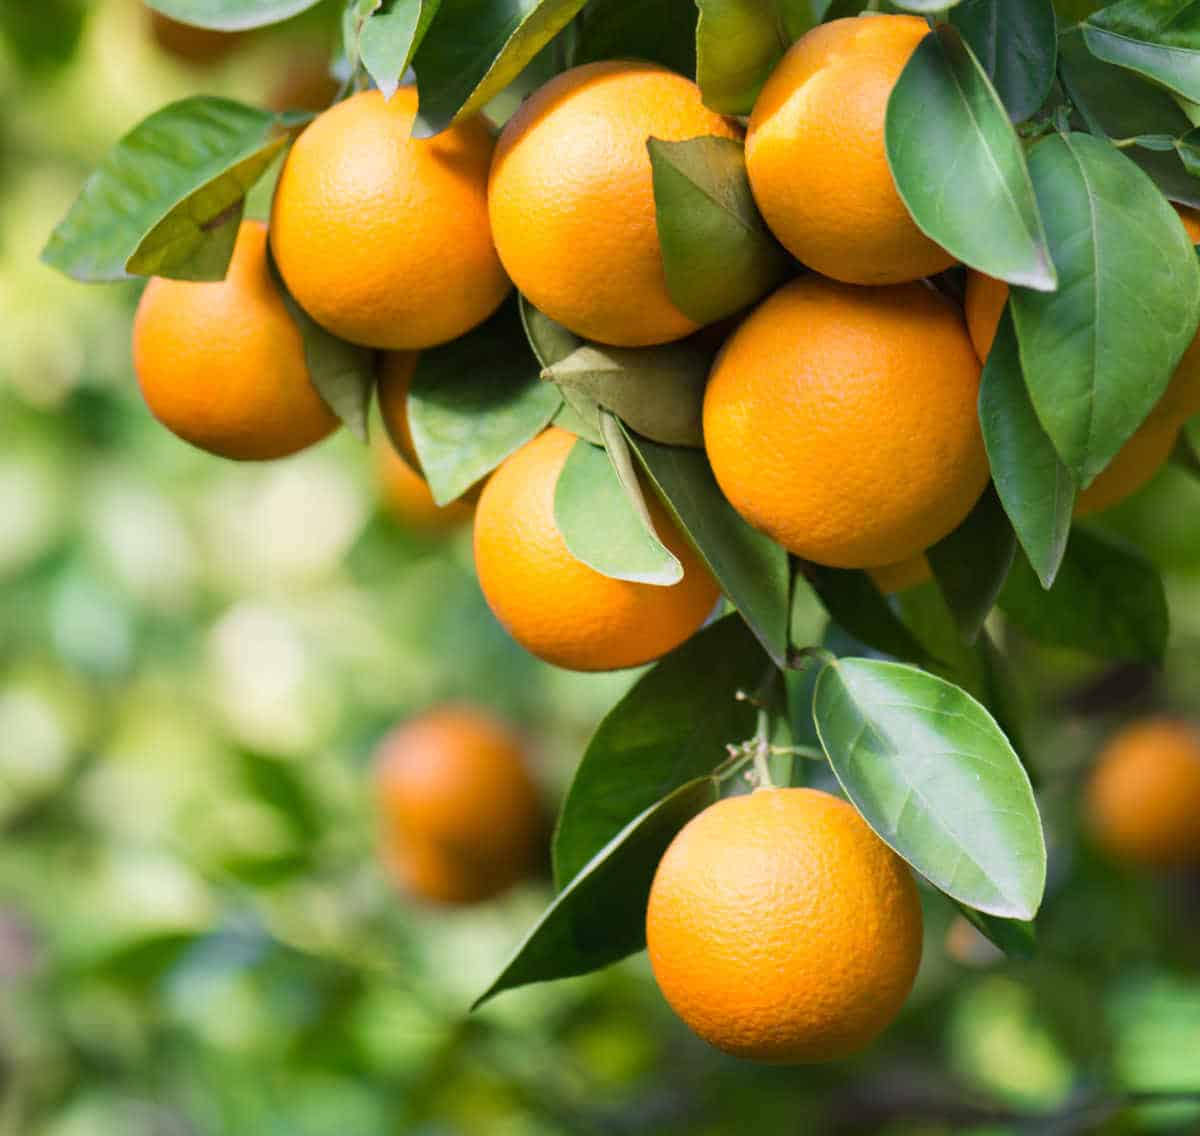 oranger en pot